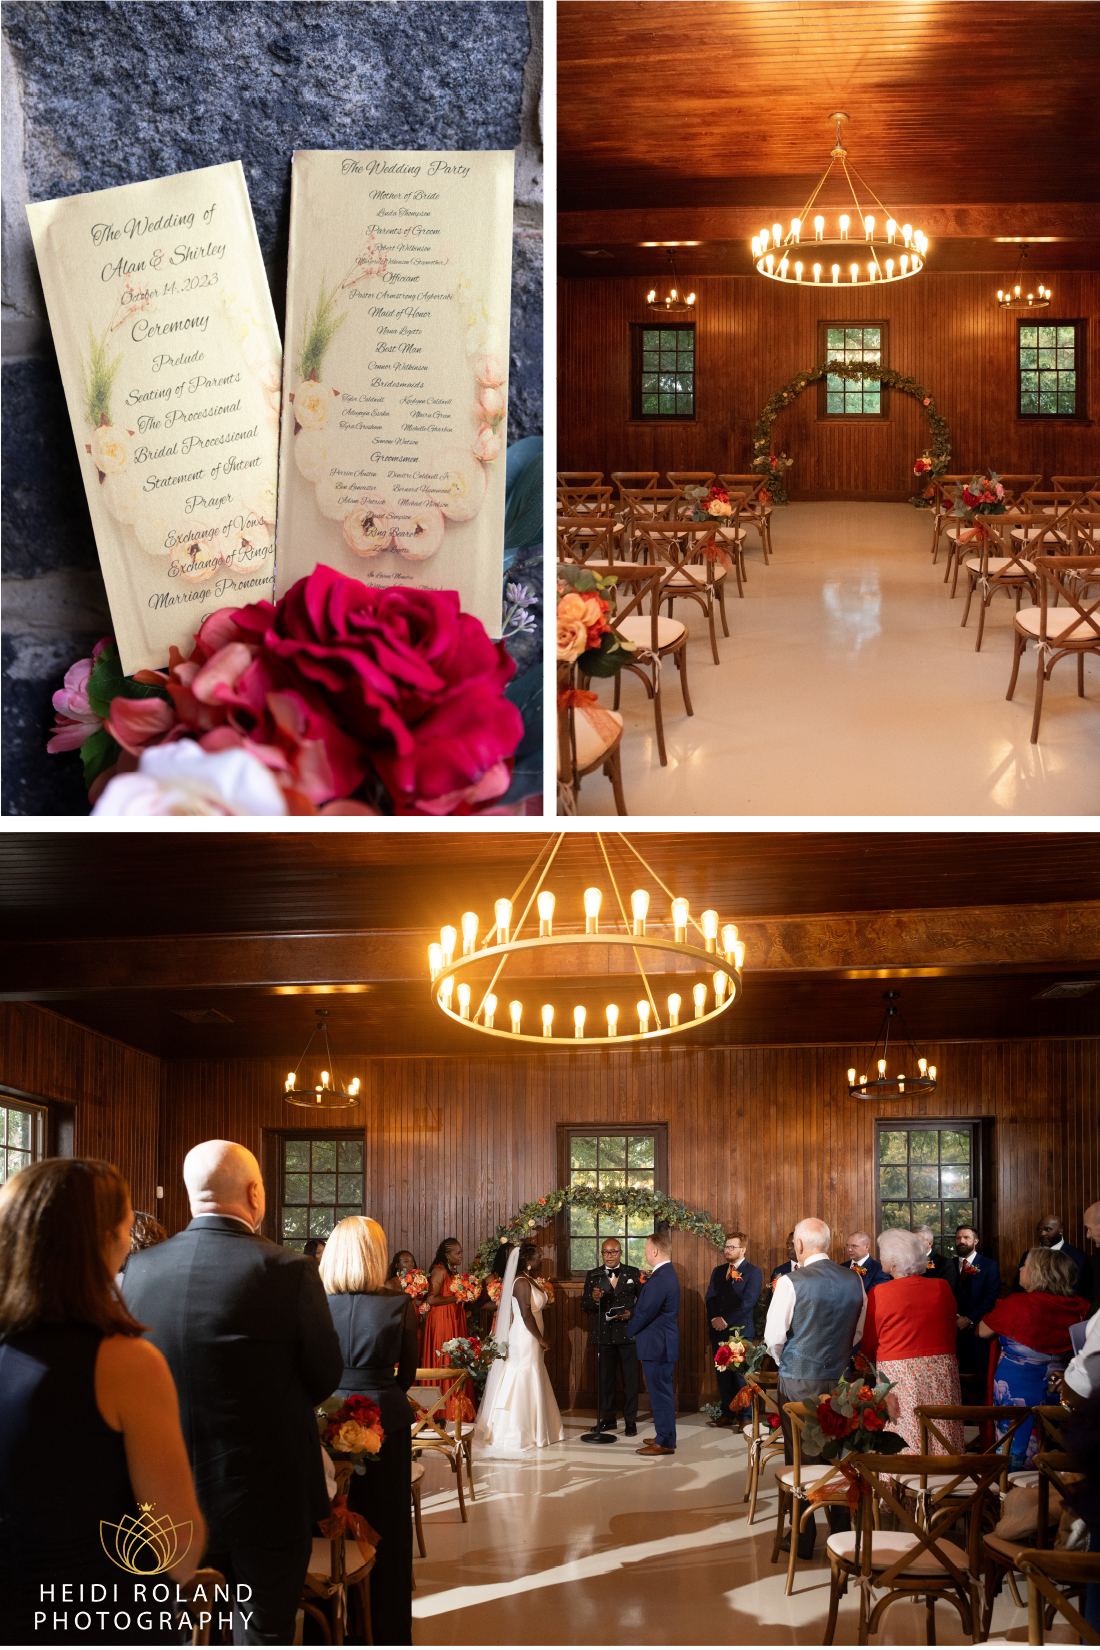 University and Whist Club Wedding ceremony inside